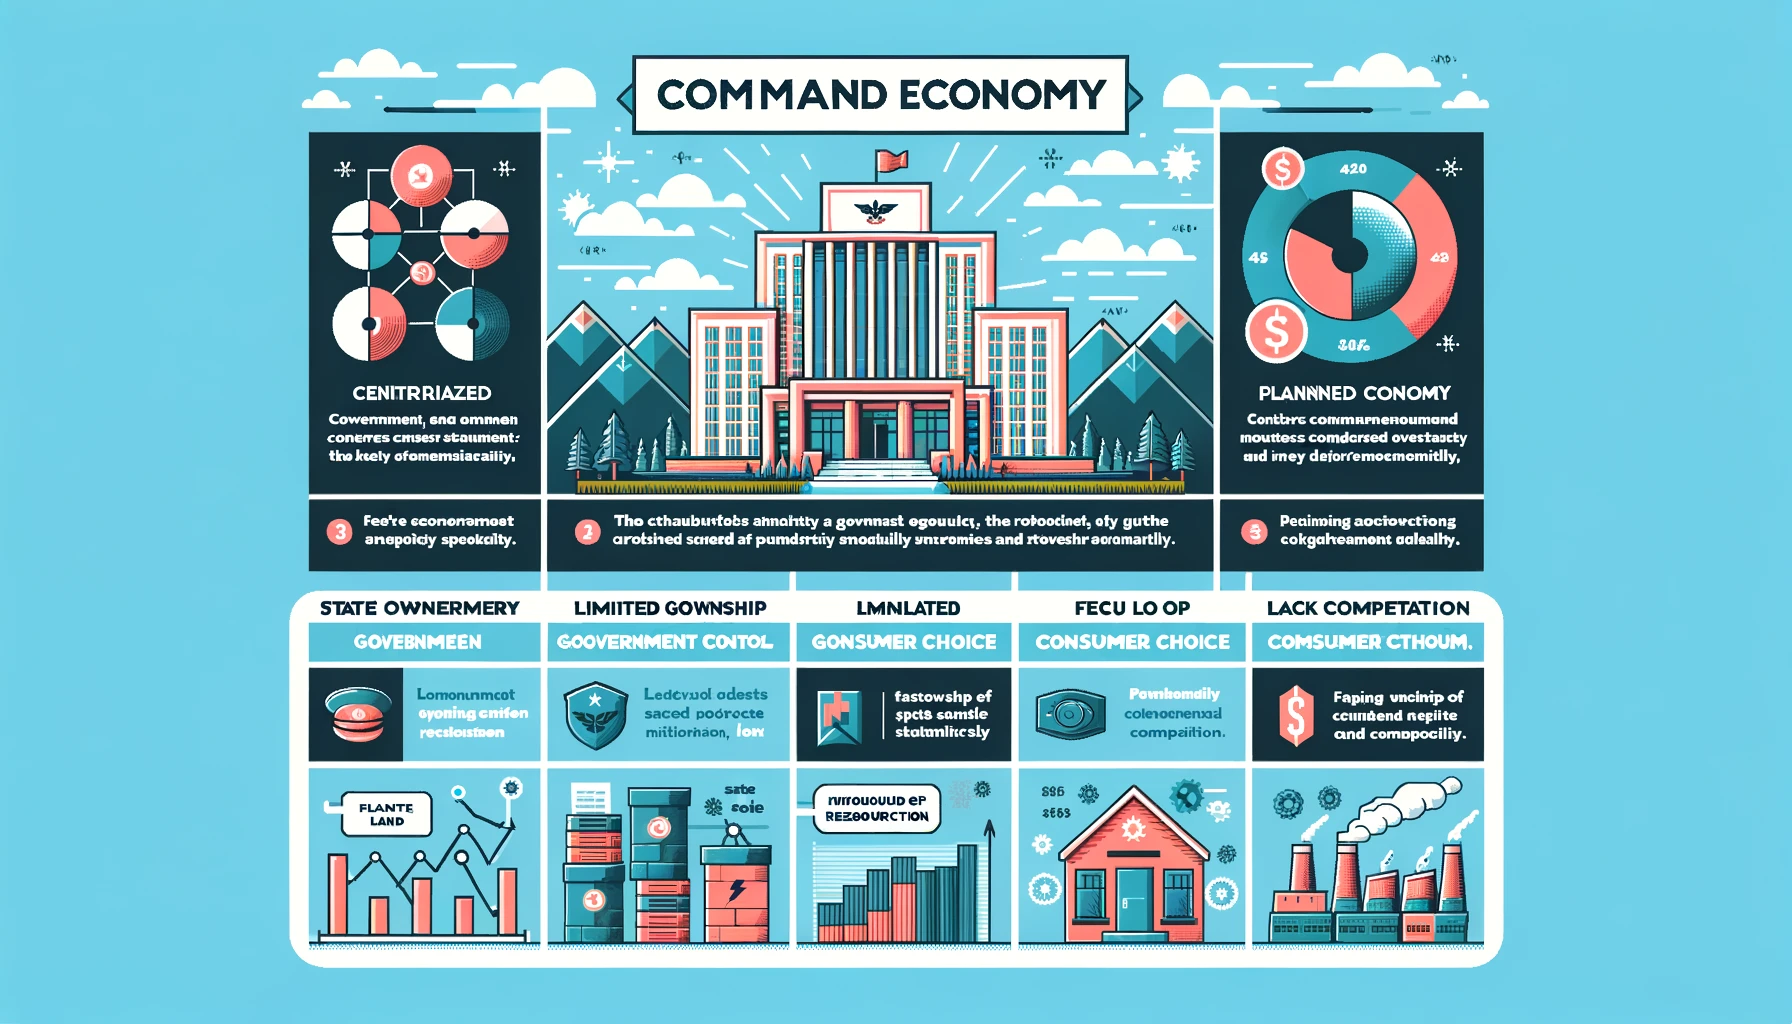 characteristics of a command economy.